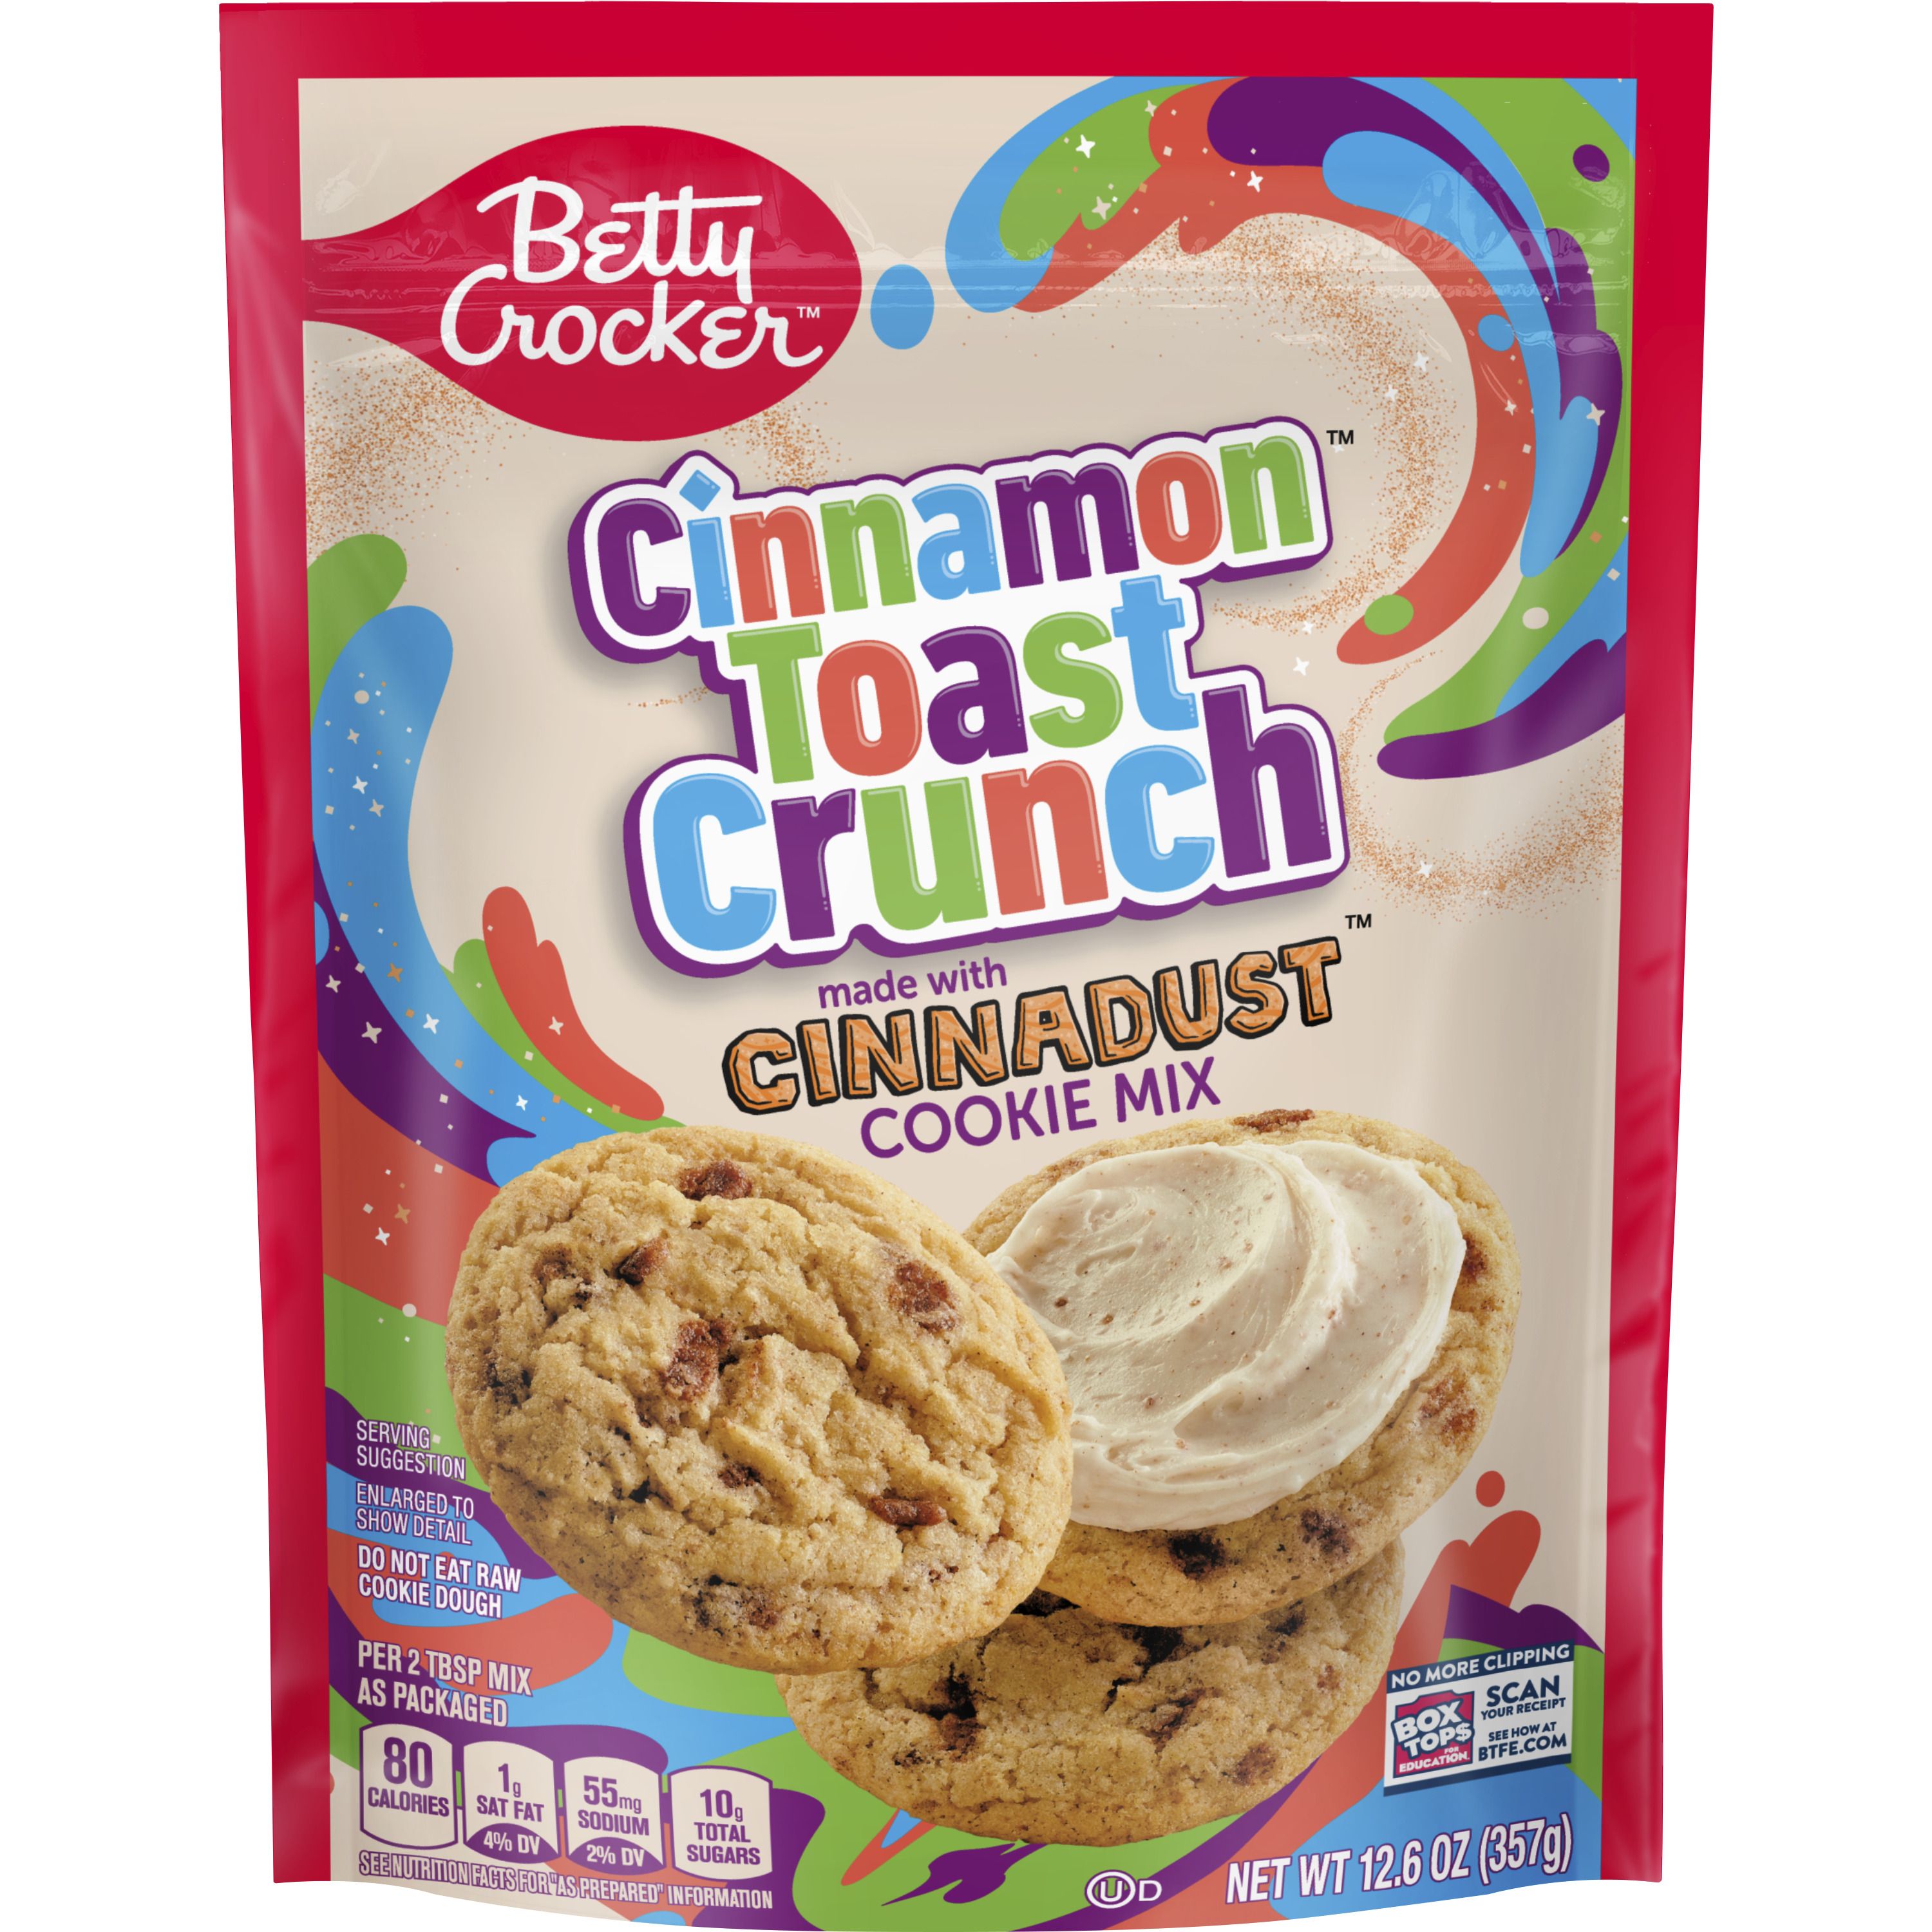 Betty Crocker Cinnamon Toast Crunch Cookie Mix, Made with Cinnadust, 12.6 oz - Front